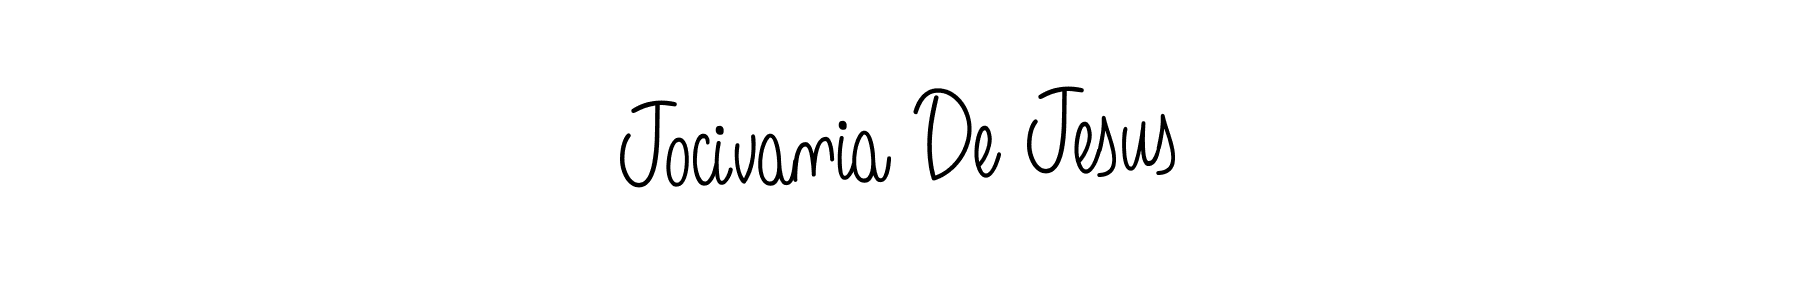 Make a beautiful signature design for name Jocivania De Jesus. Use this online signature maker to create a handwritten signature for free. Jocivania De Jesus signature style 5 images and pictures png